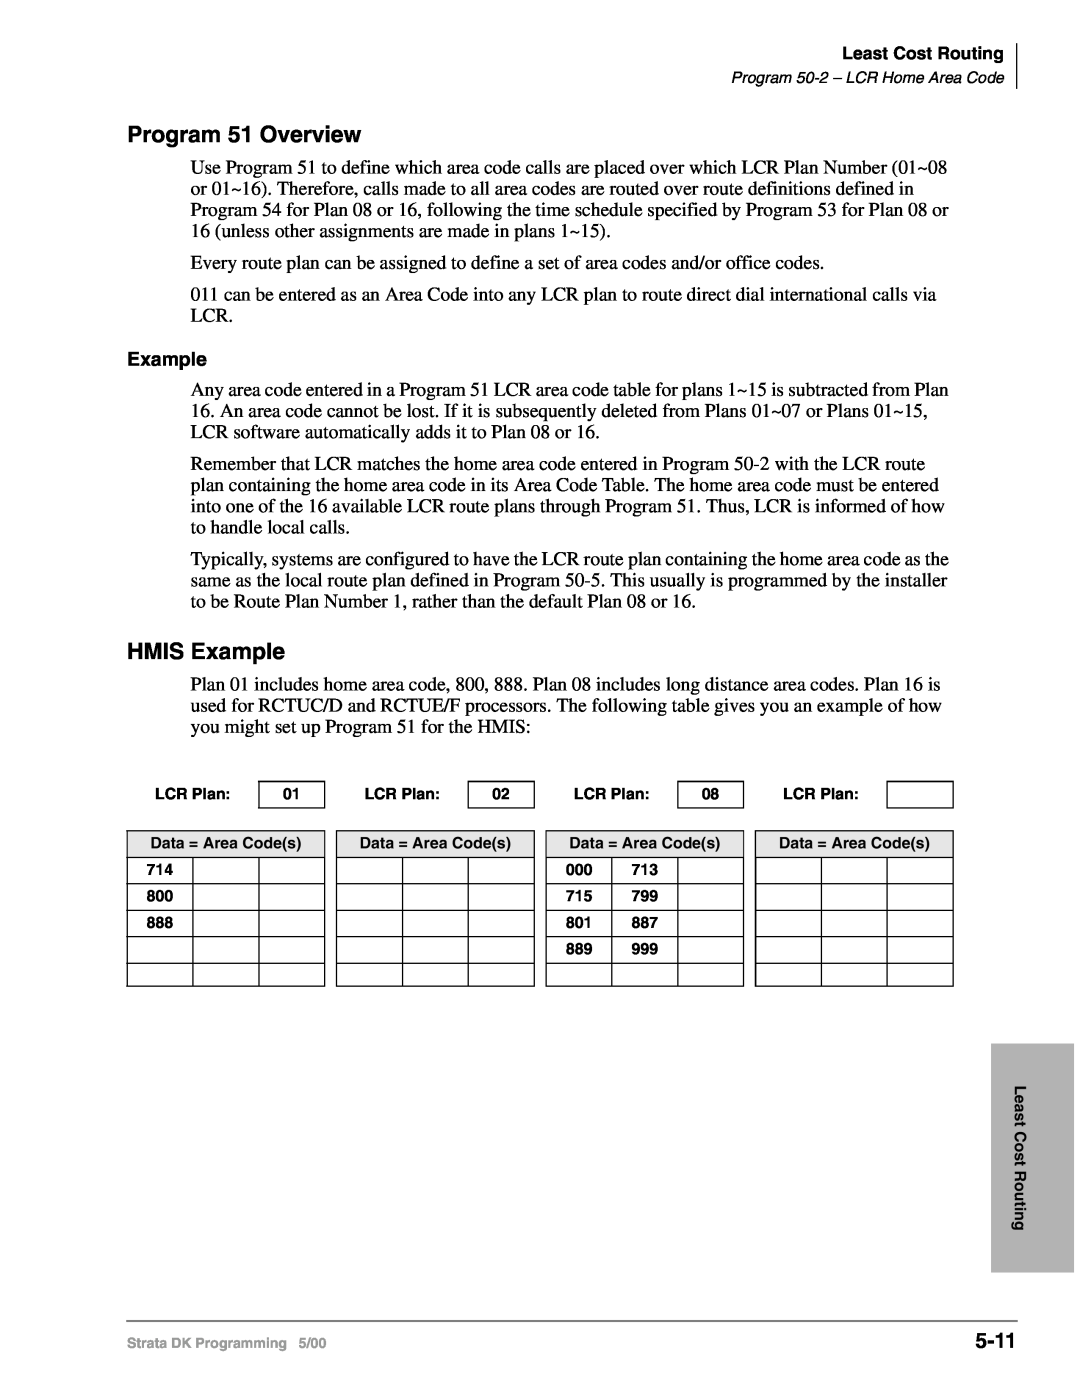 Toshiba dk14, DK40I, DK424I manual Program 51 Overview, HMIS Example, 5-11 